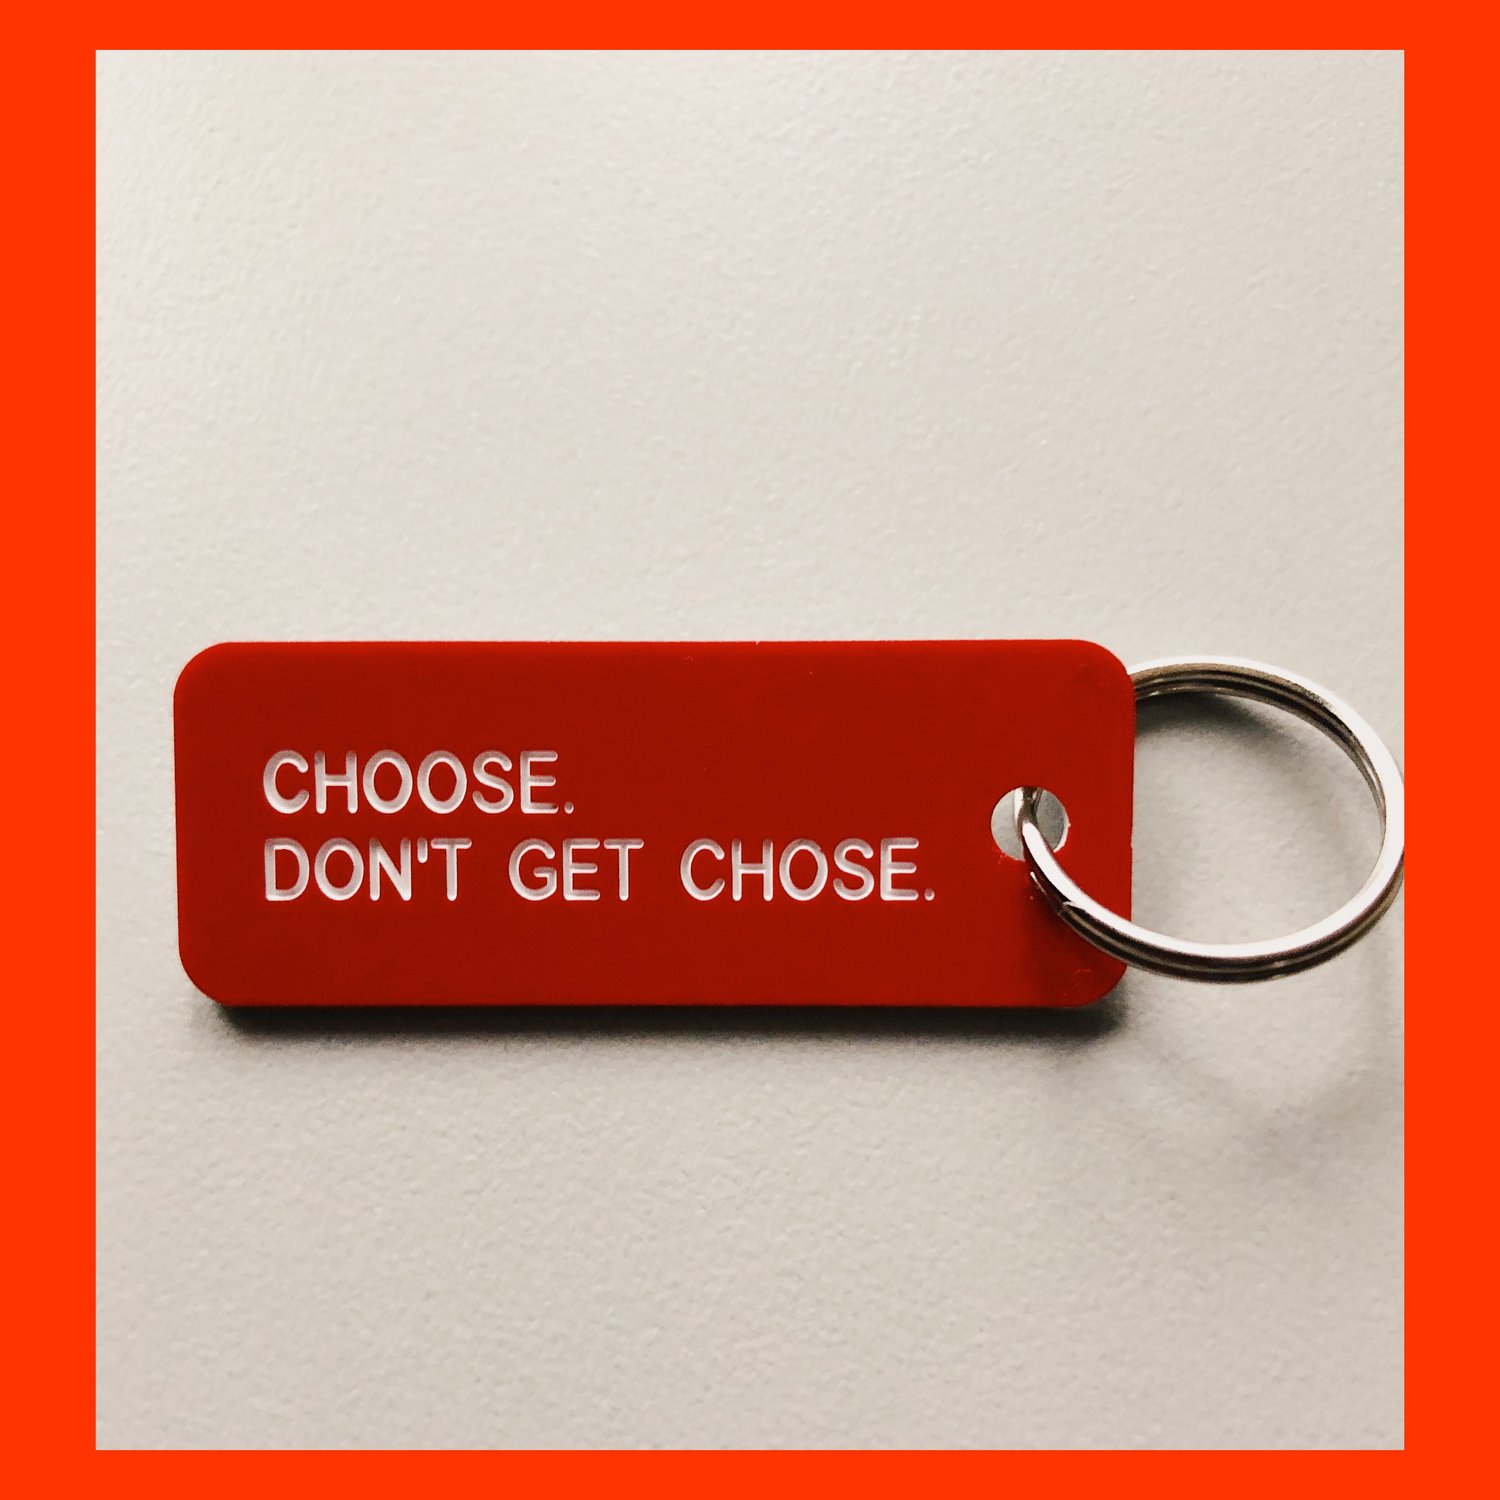 Image of "Choose. Don't Get Chose"